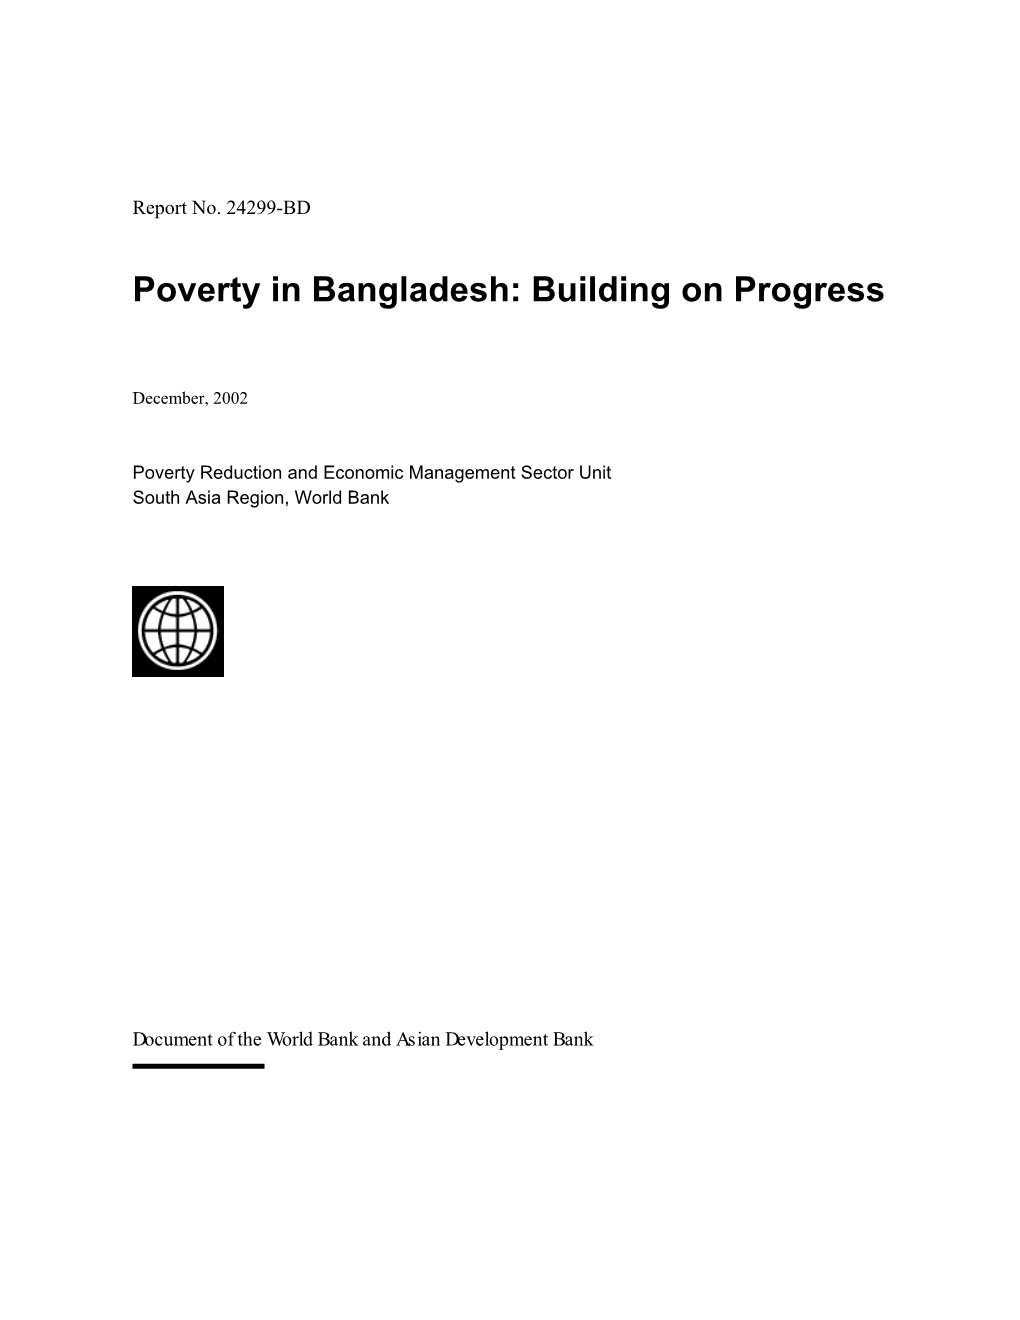 Poverty in Bangladesh: Building on Progress